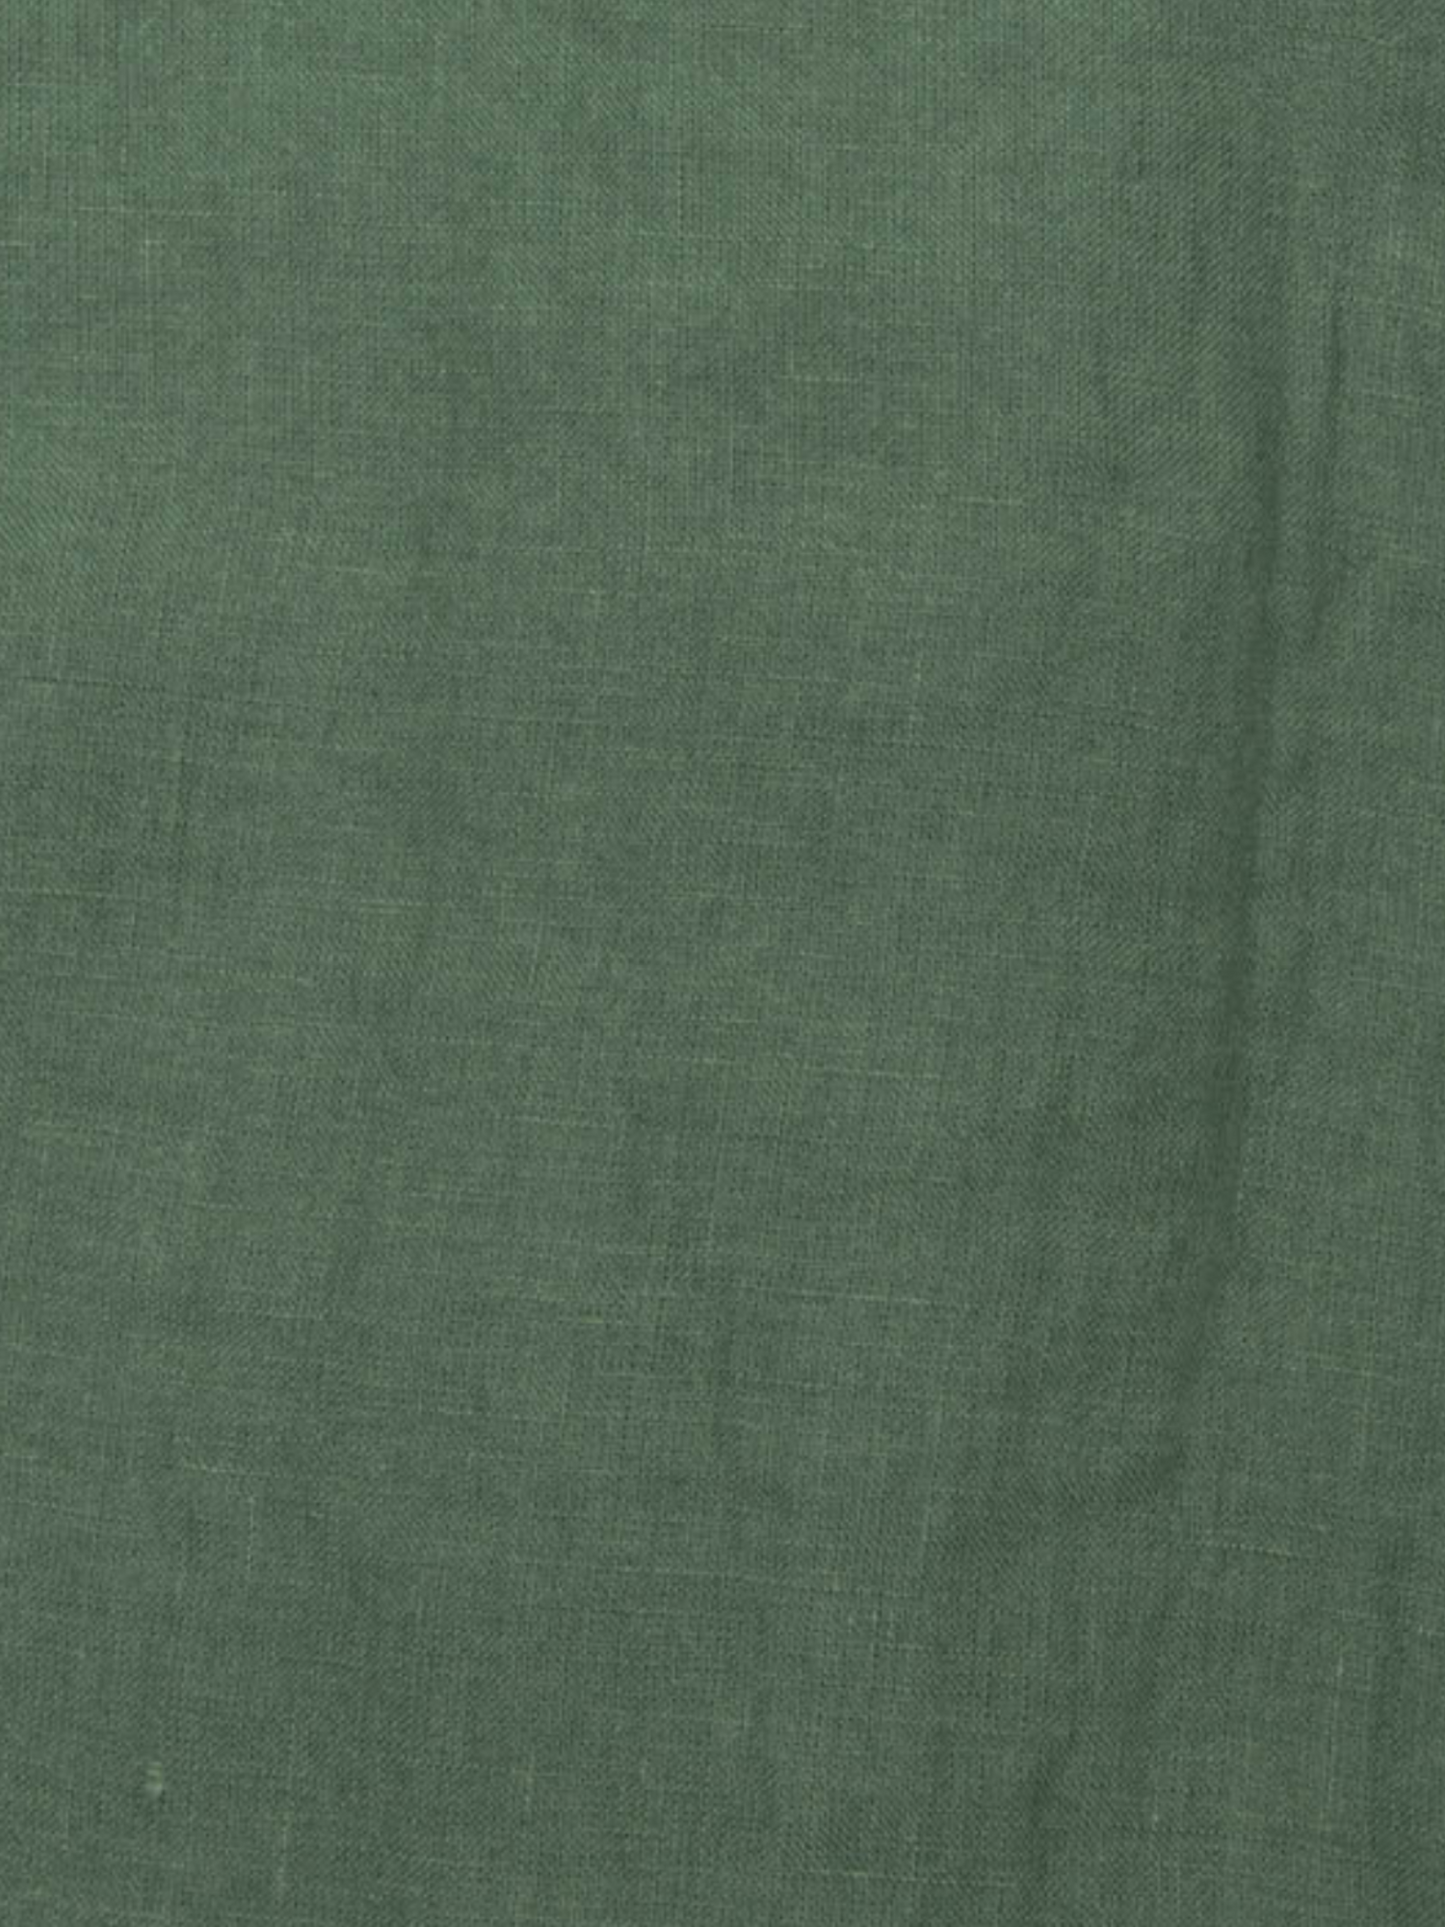 100% Linen Curtains - Green color. Dusty linen